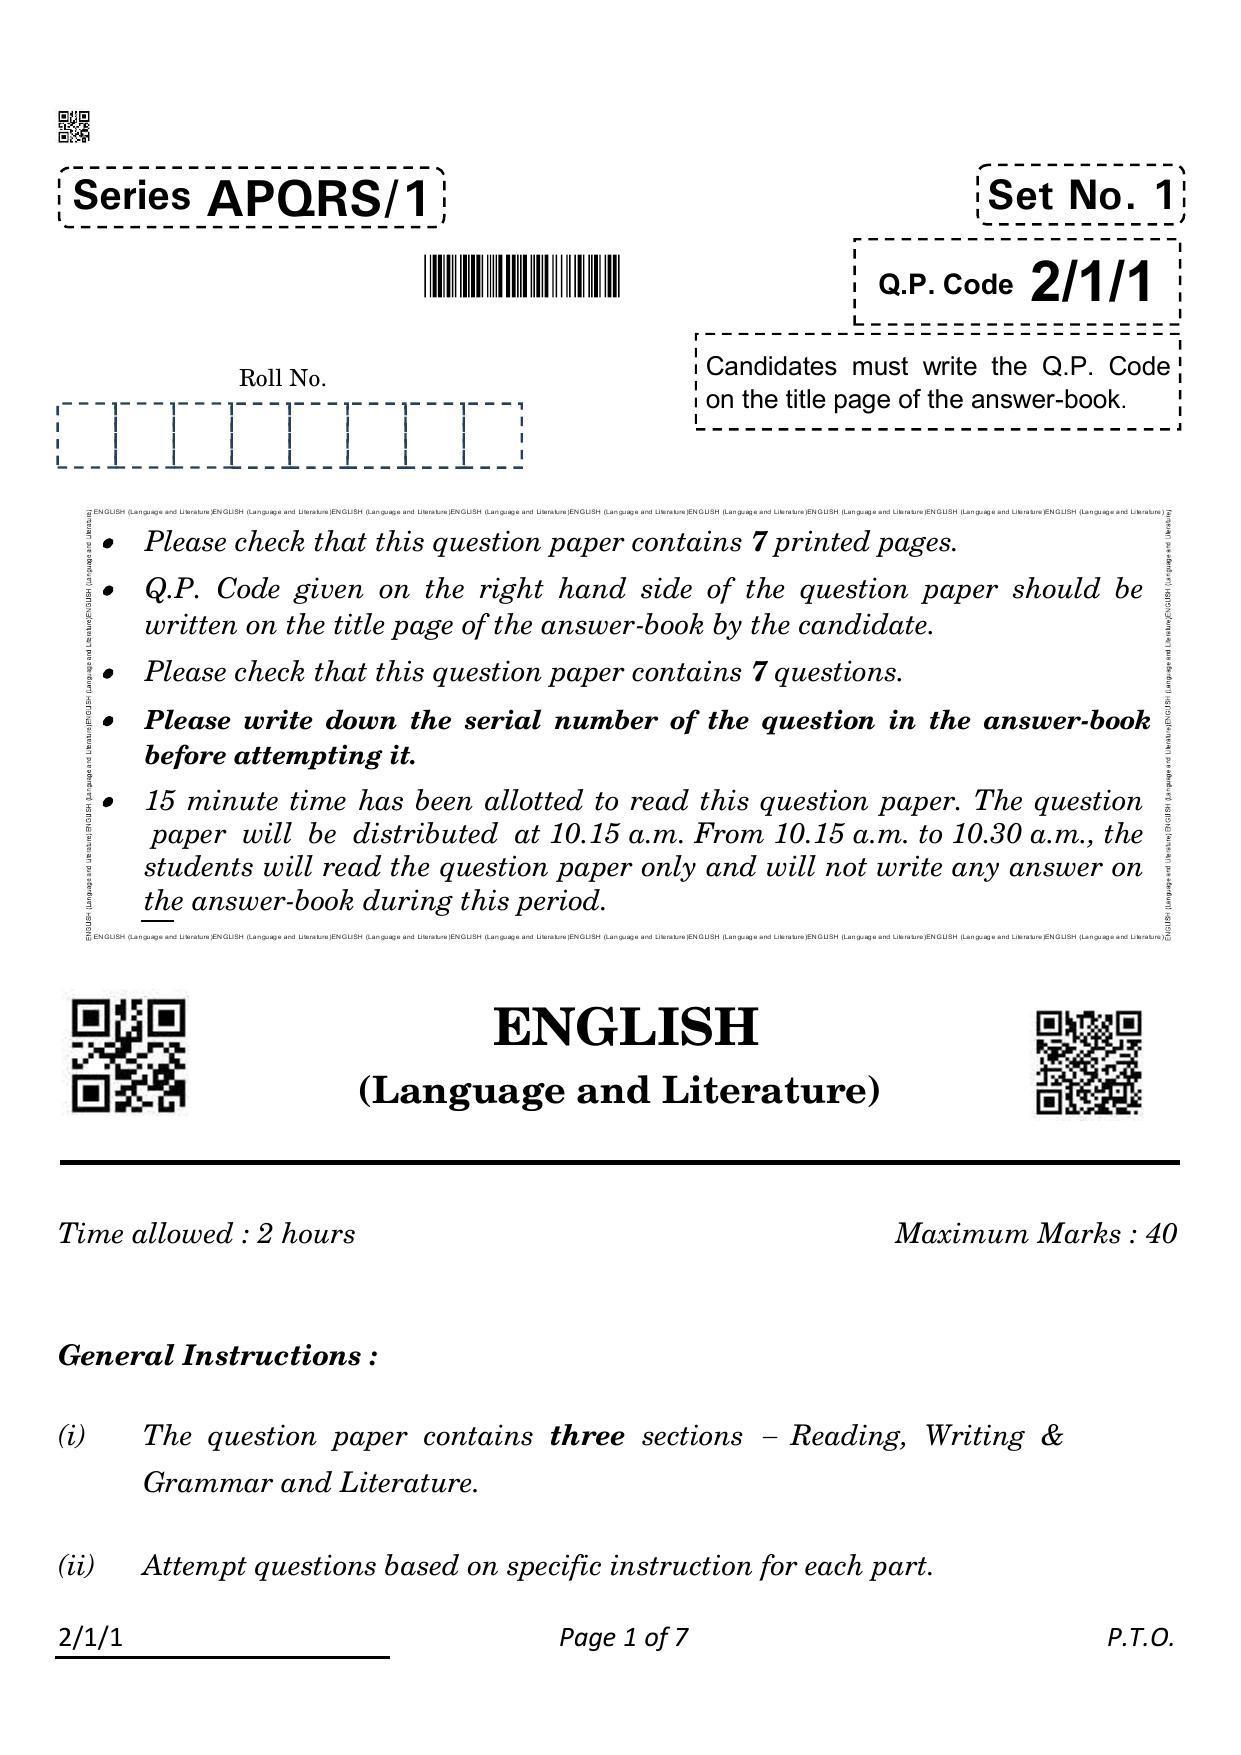 CBSE Class 10 2-1-1 English L & L 2022 Question Paper - Page 1